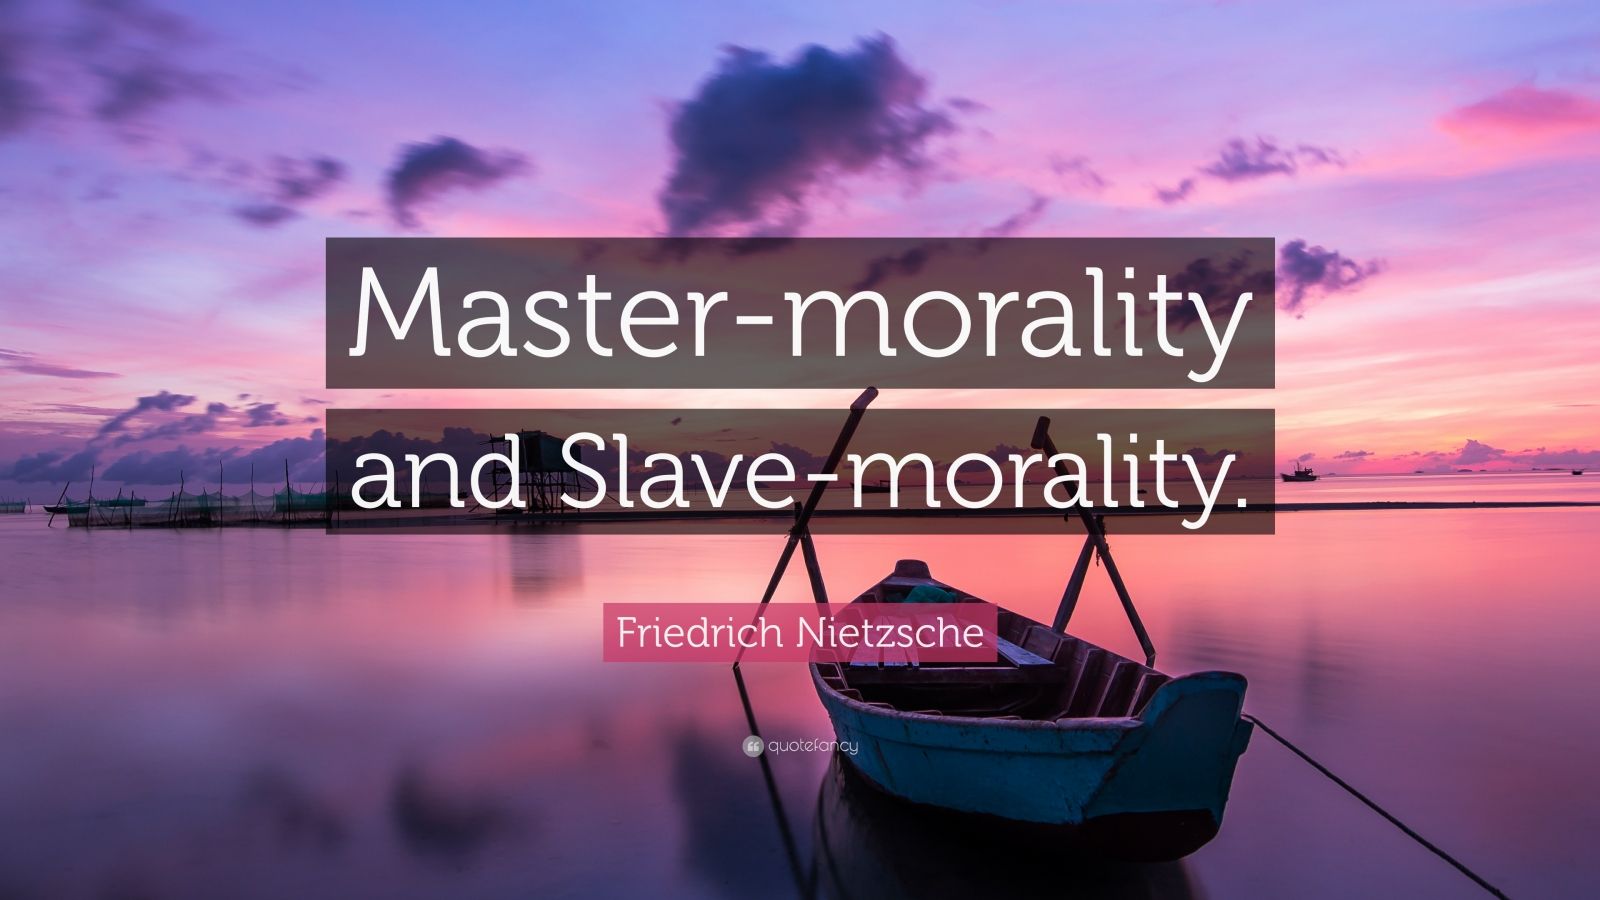 Friedrich Nietzsche Quote: “Master-morality and Slave